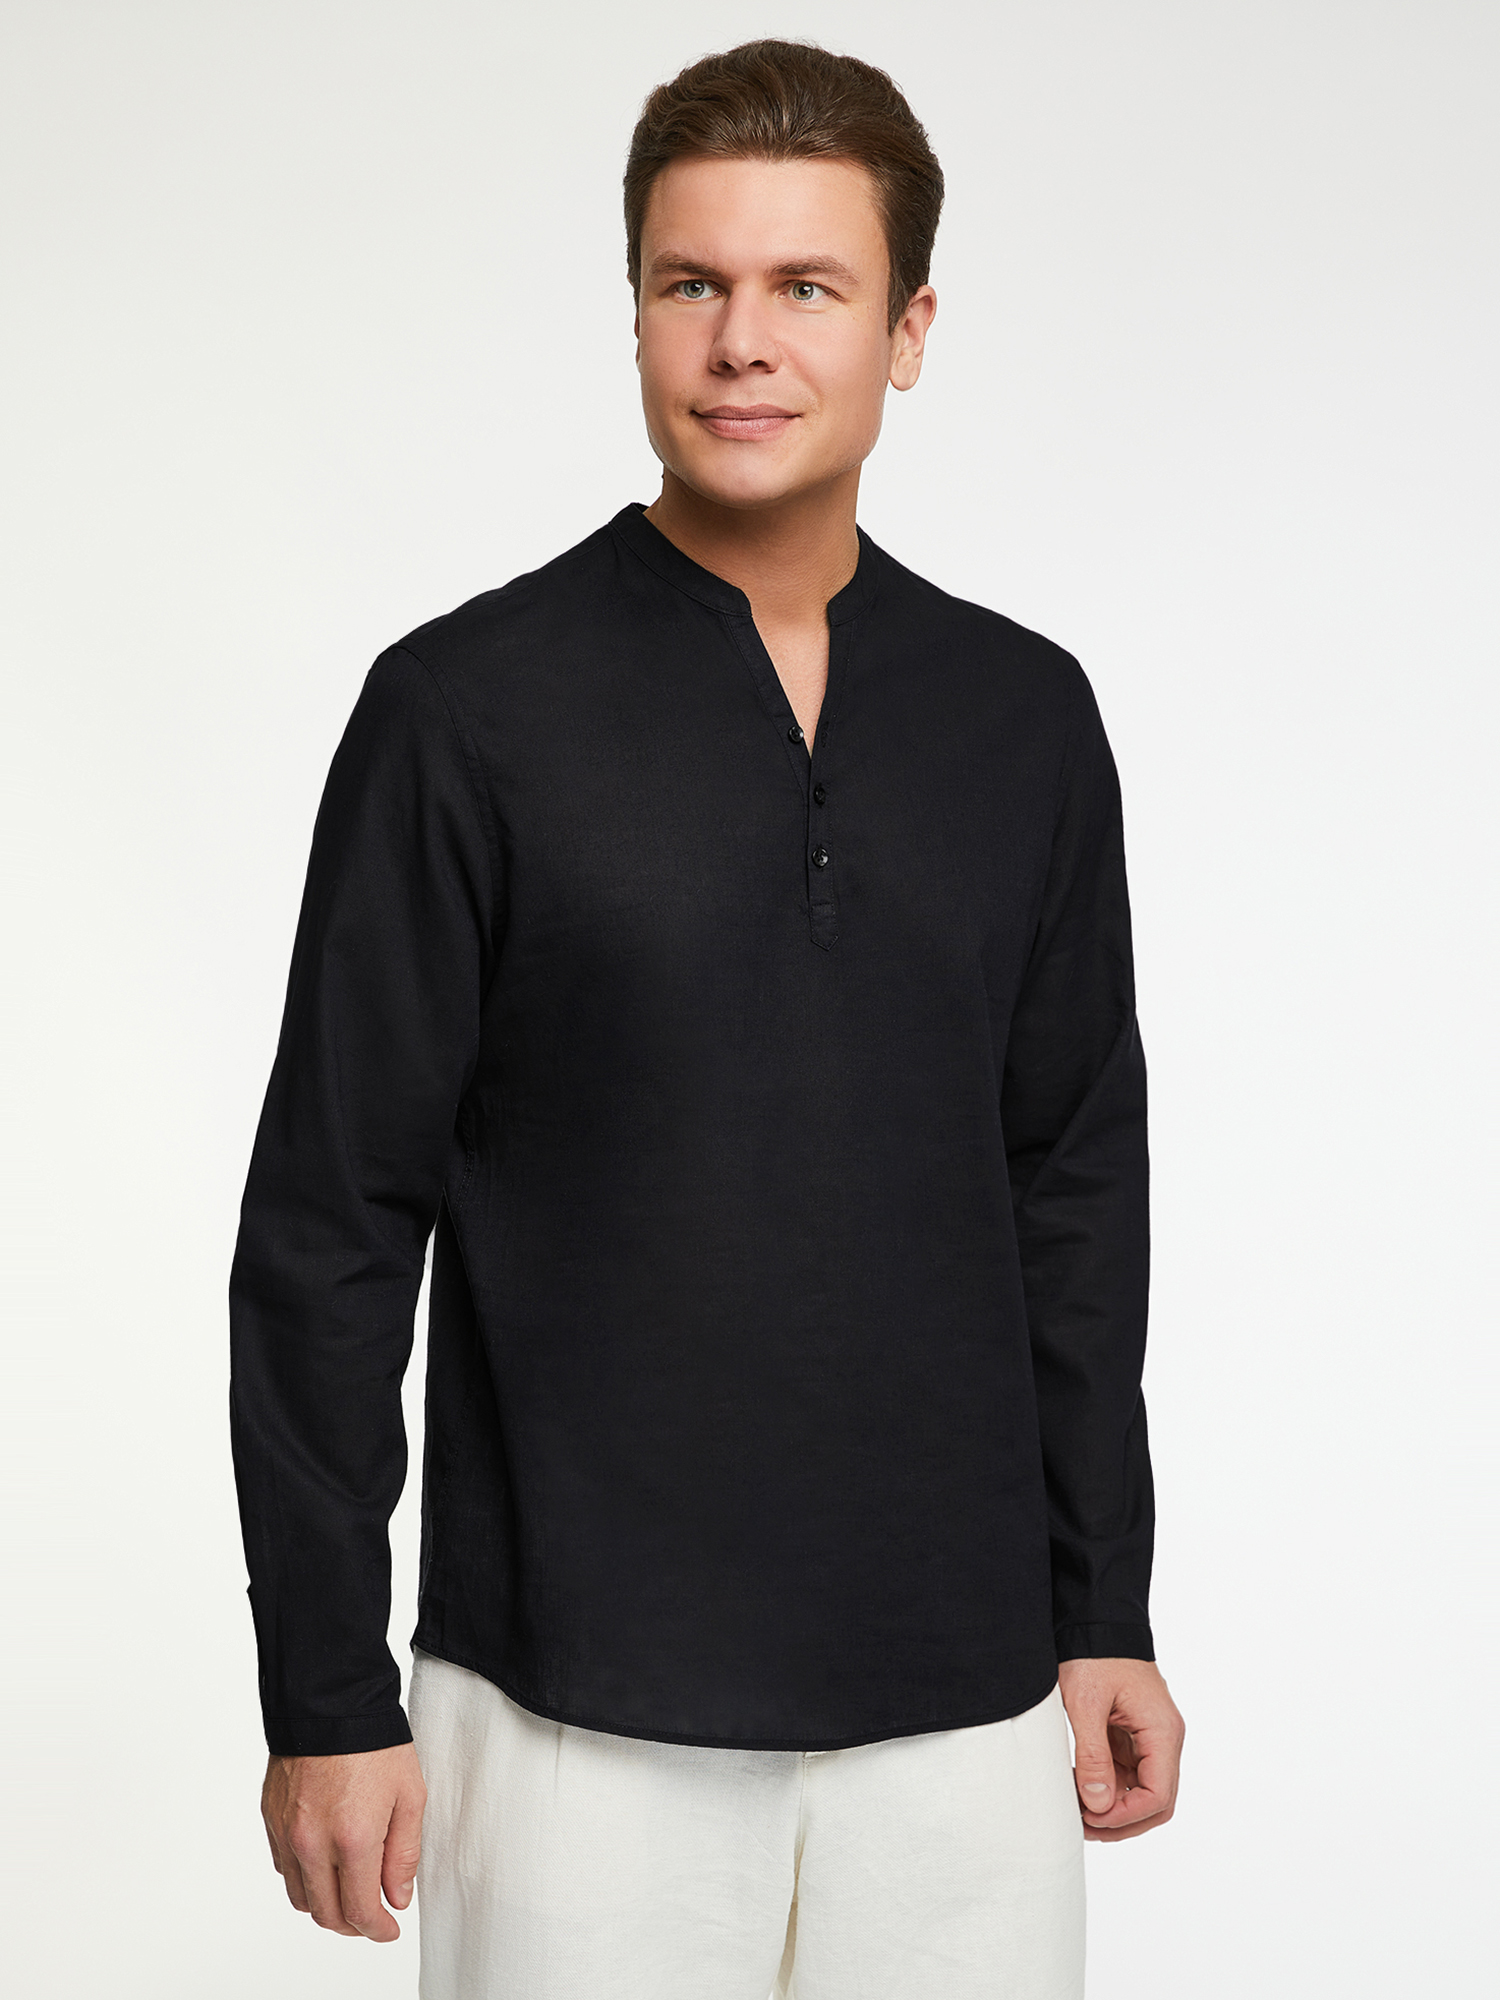 Рубашка мужская oodji 3B320002M-4 черная 2XL